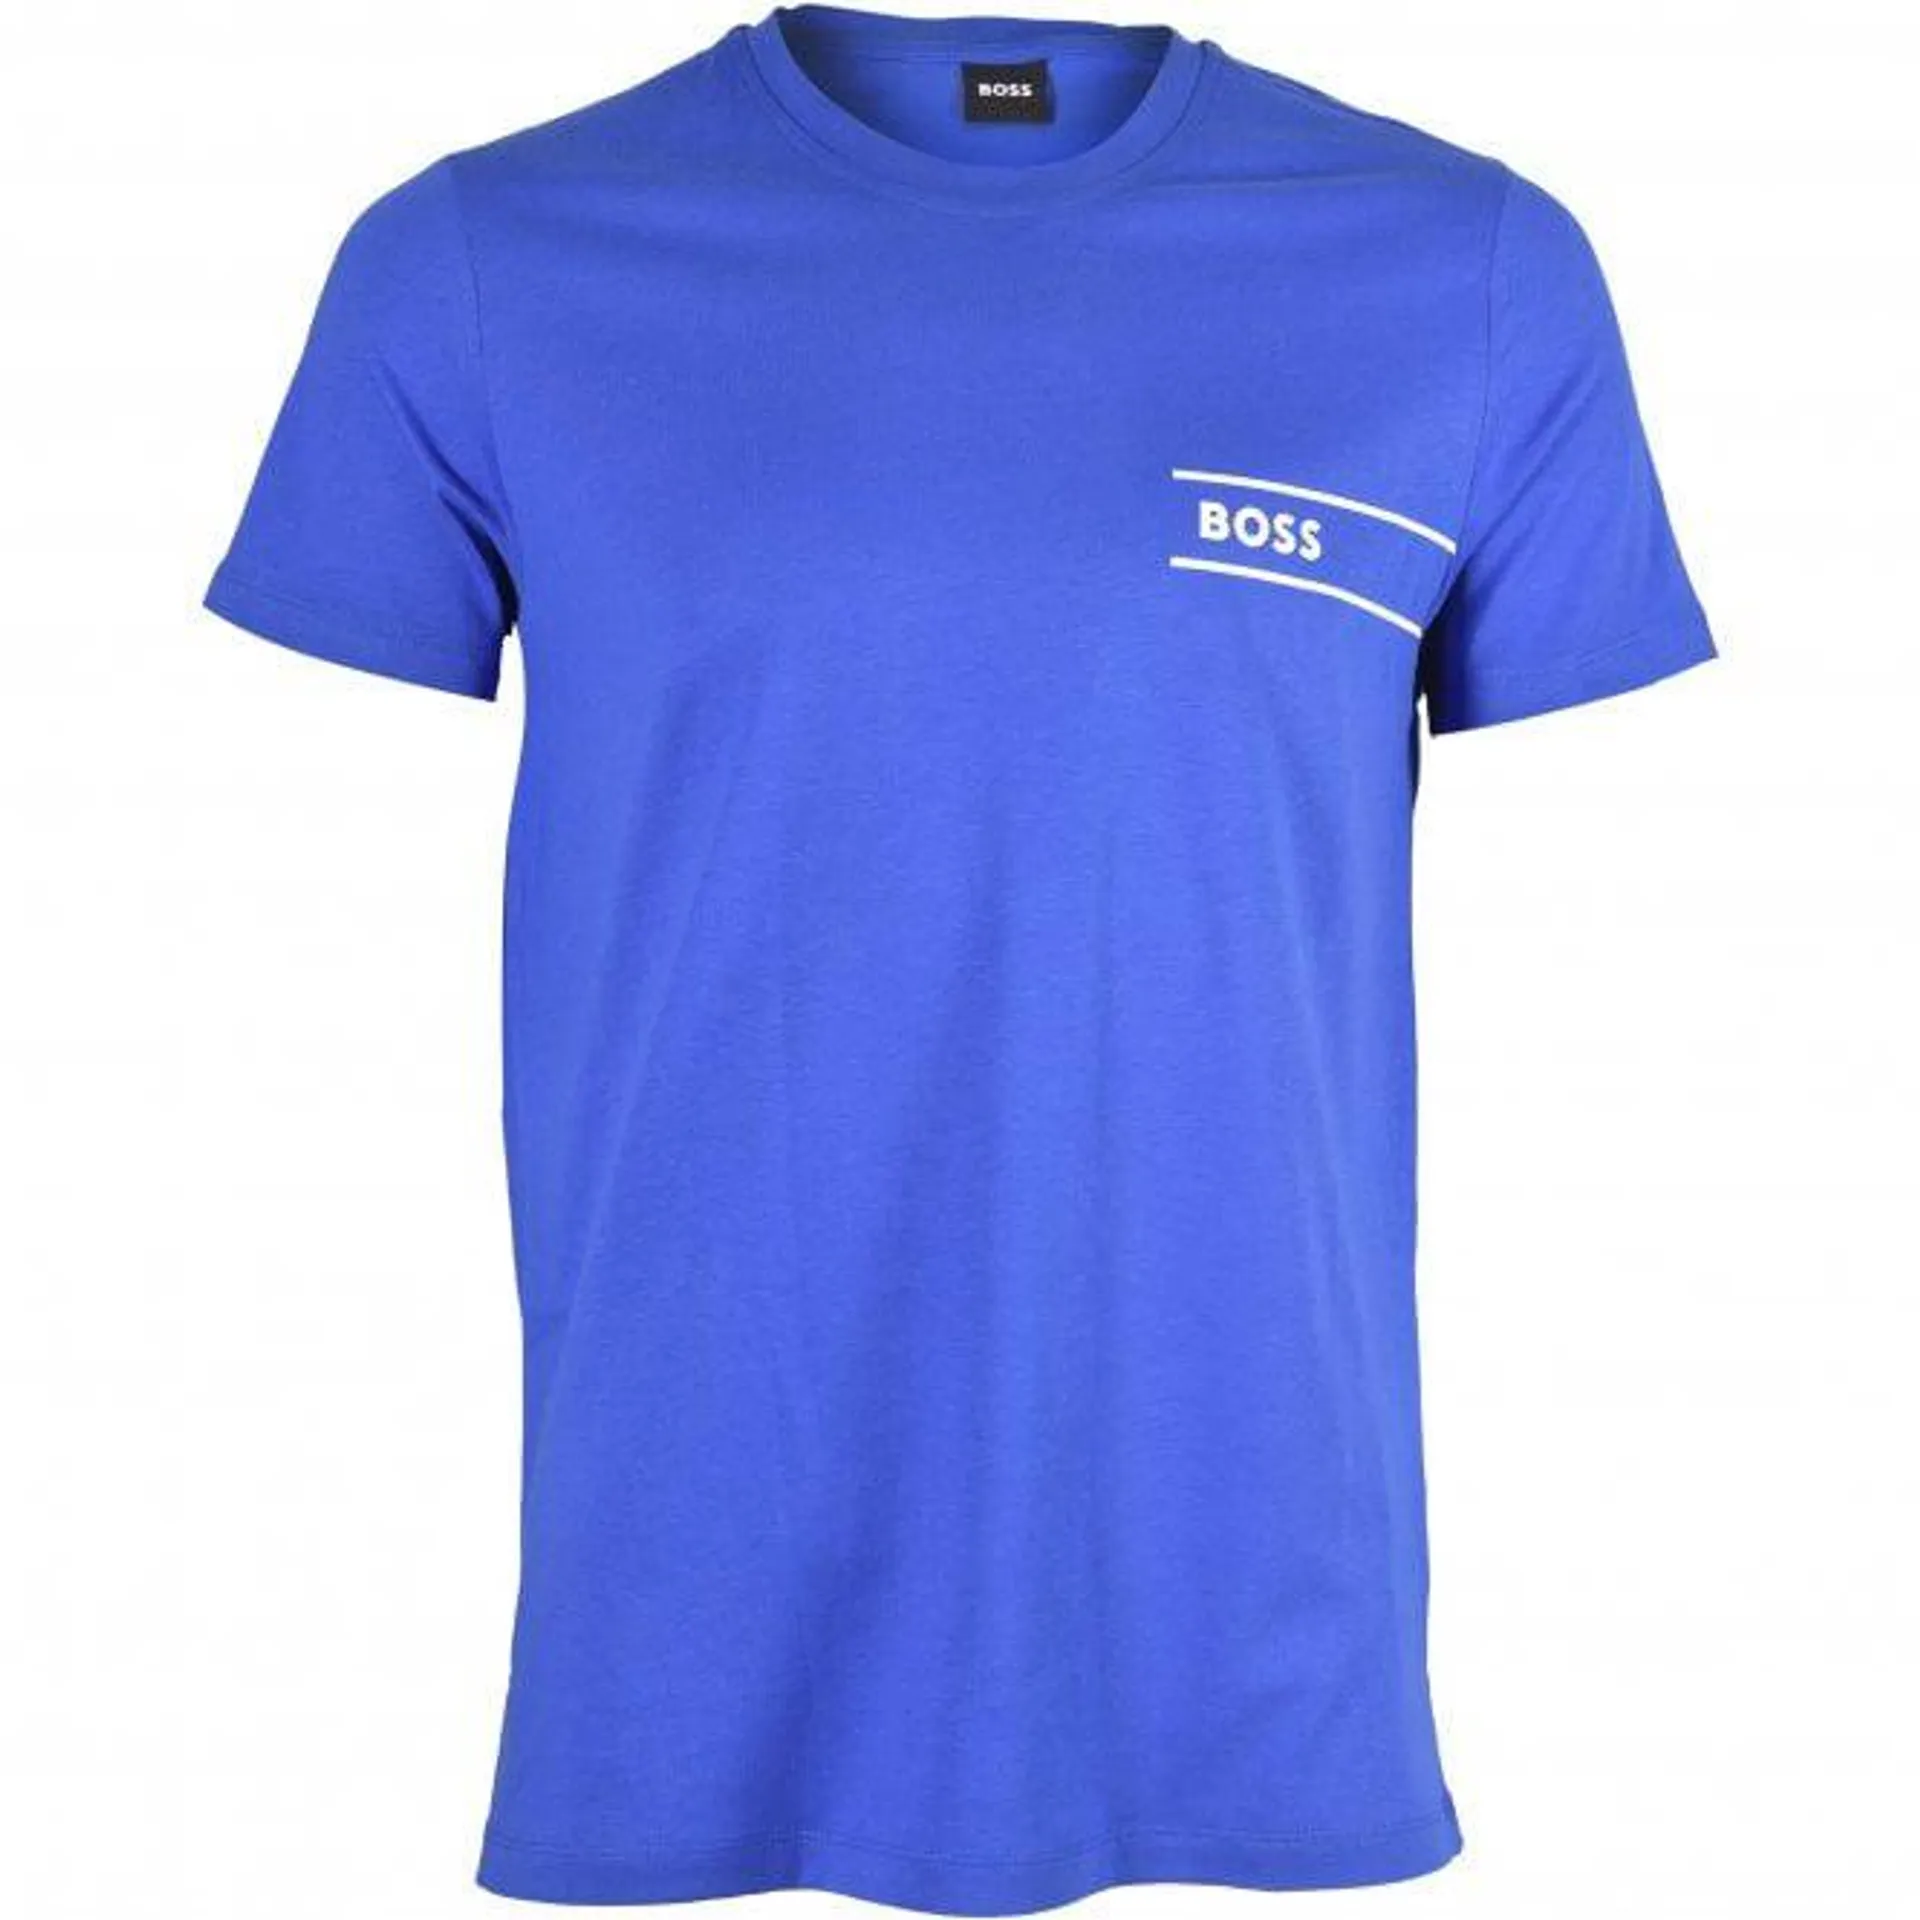 Luxe Cotton 24 Crew-Neck Lougewear T-Shirt, Blue/white